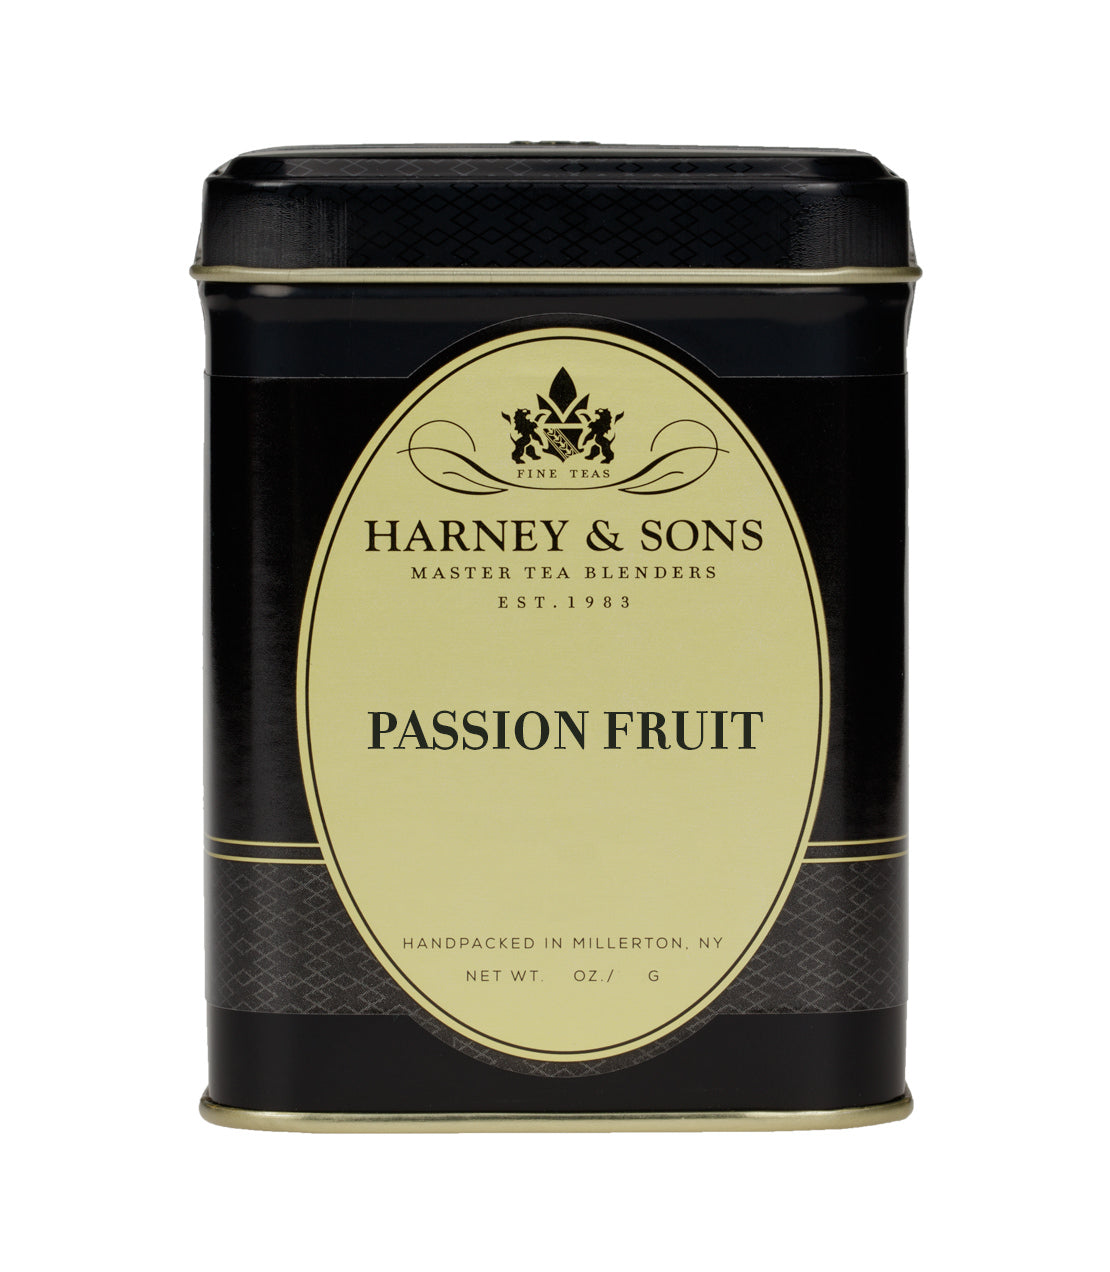 Passion Fruit - Loose 4 oz. Tin - Harney & Sons Fine Teas